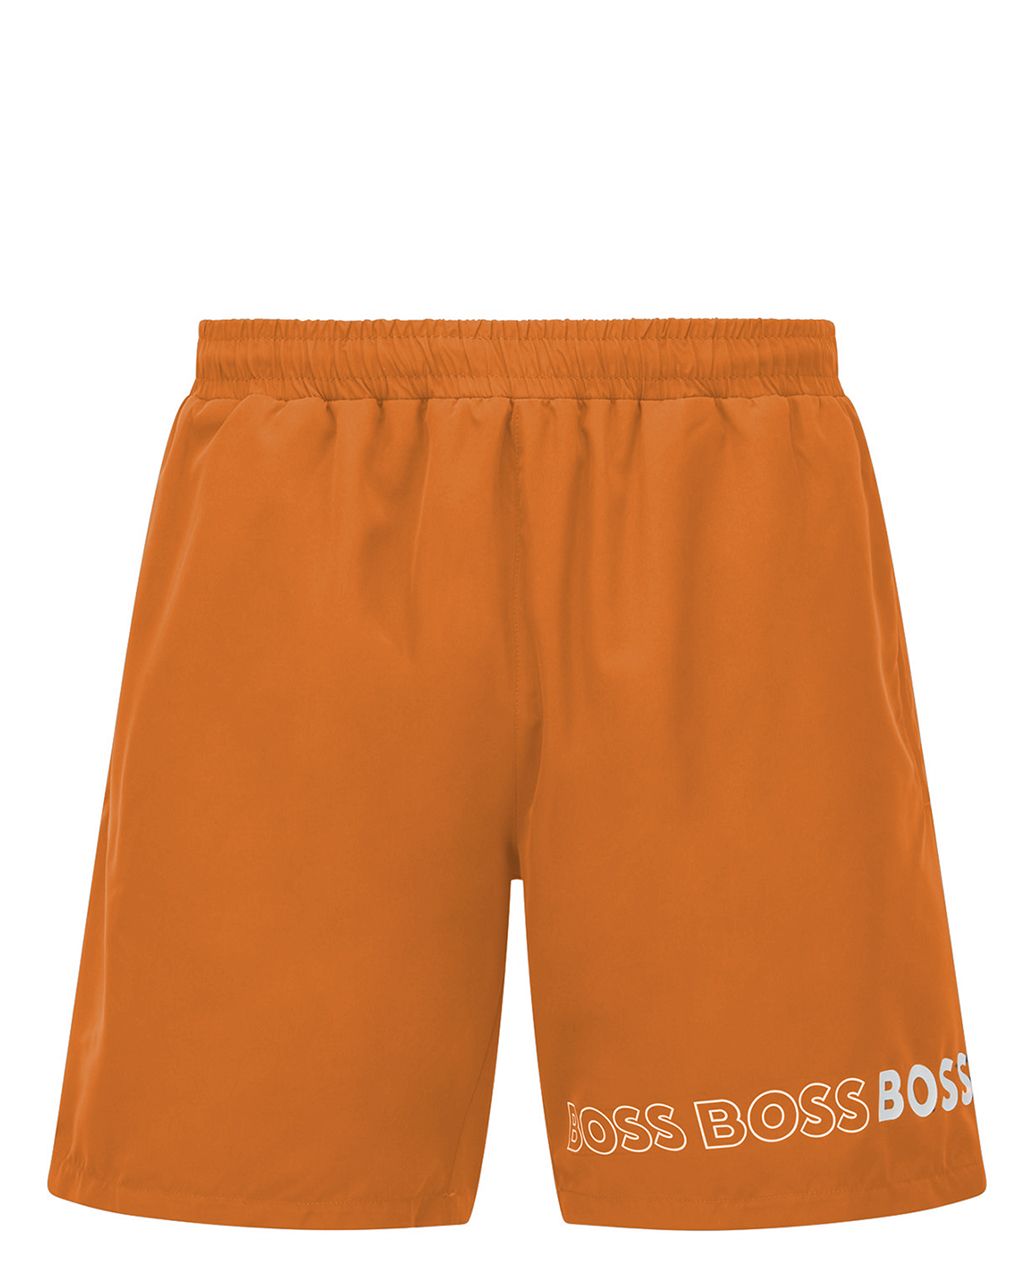 Hugo Boss Menswear Dolphin Zwemshort Oranje 076951-001-L